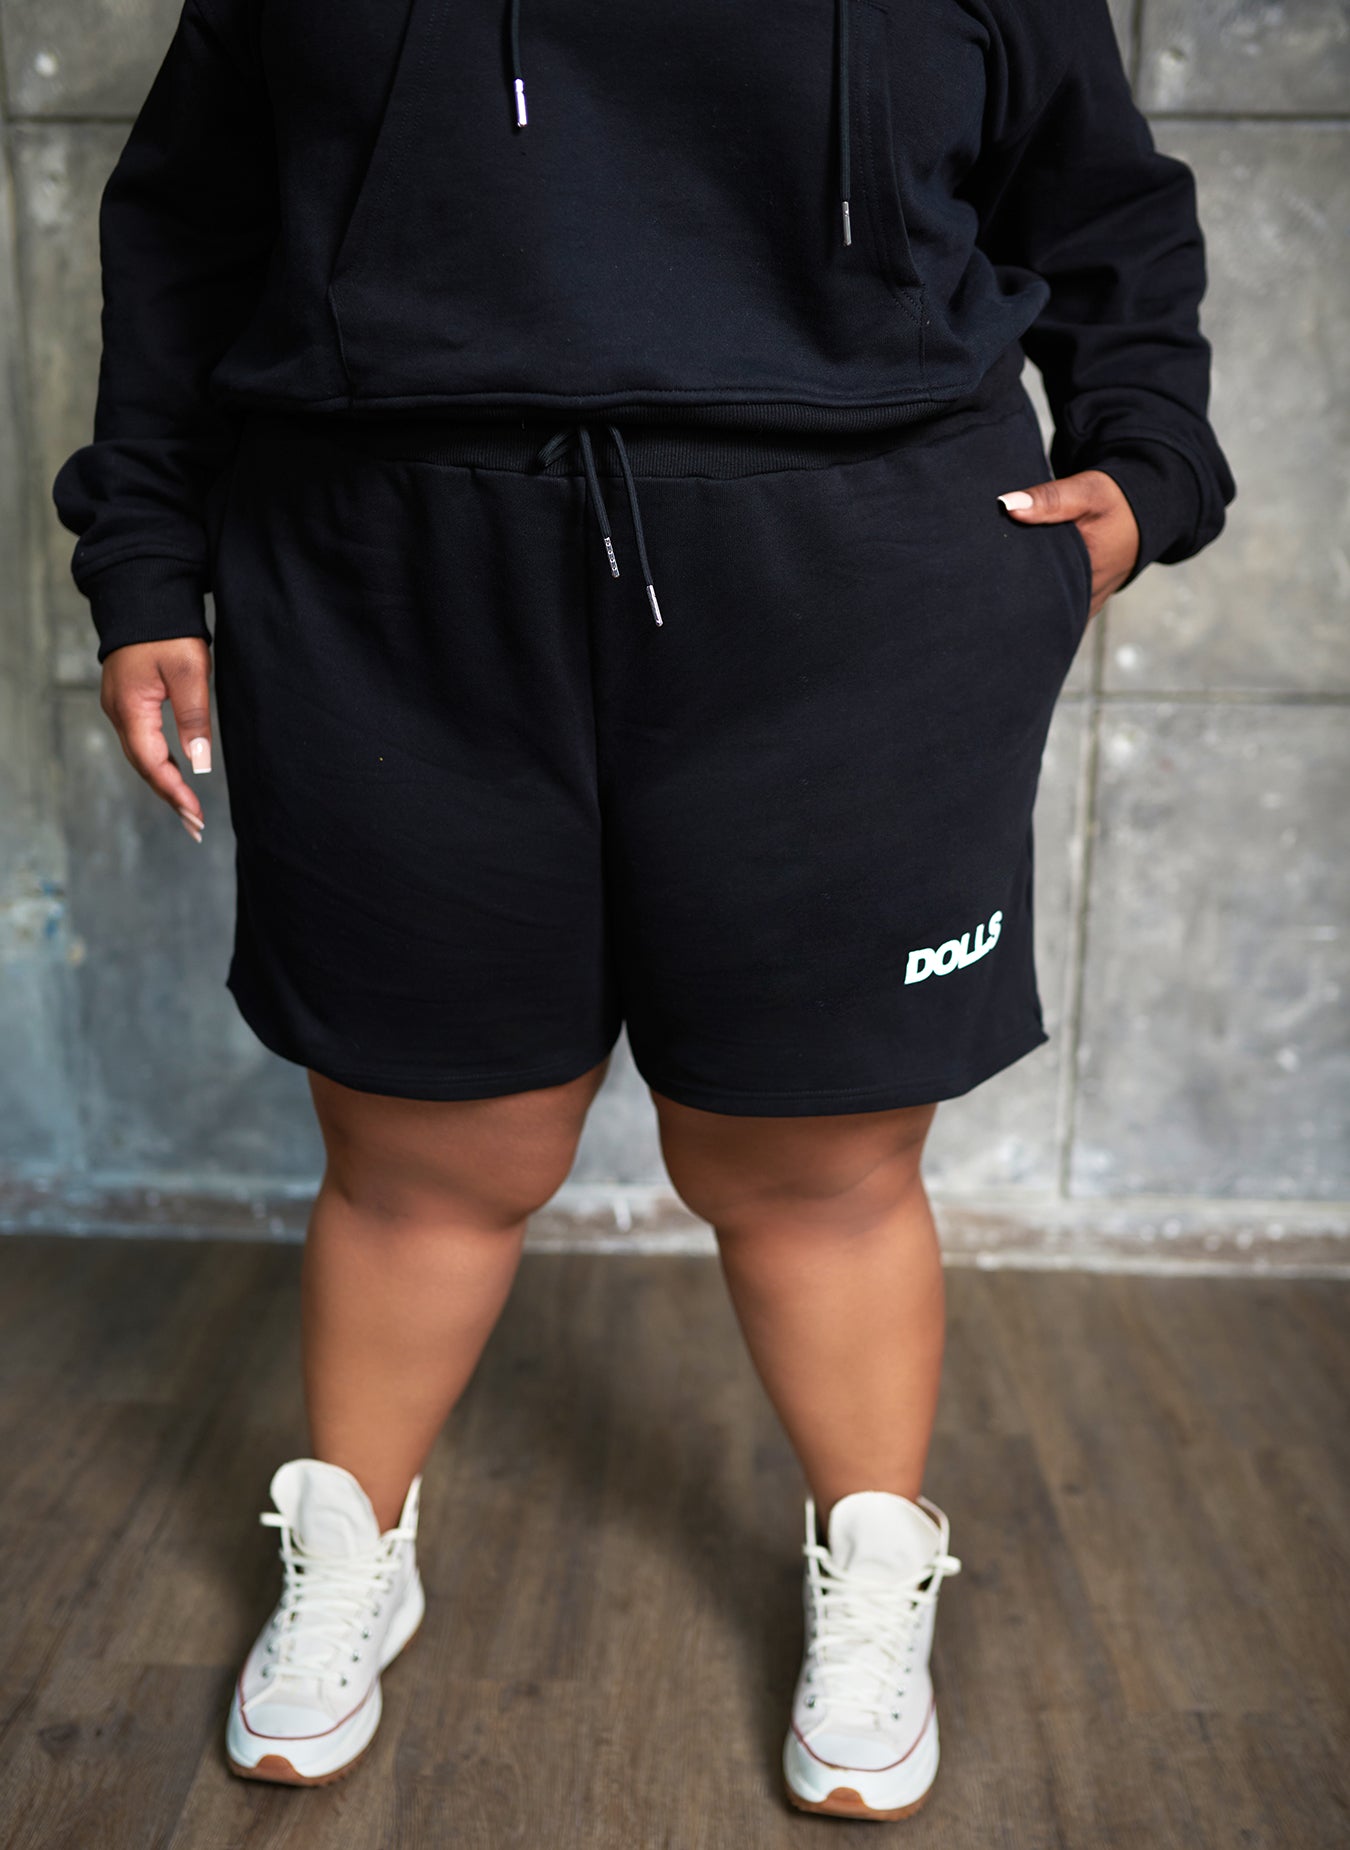 Black Rebdolls Only Drawstring Shorts Plus Sizes